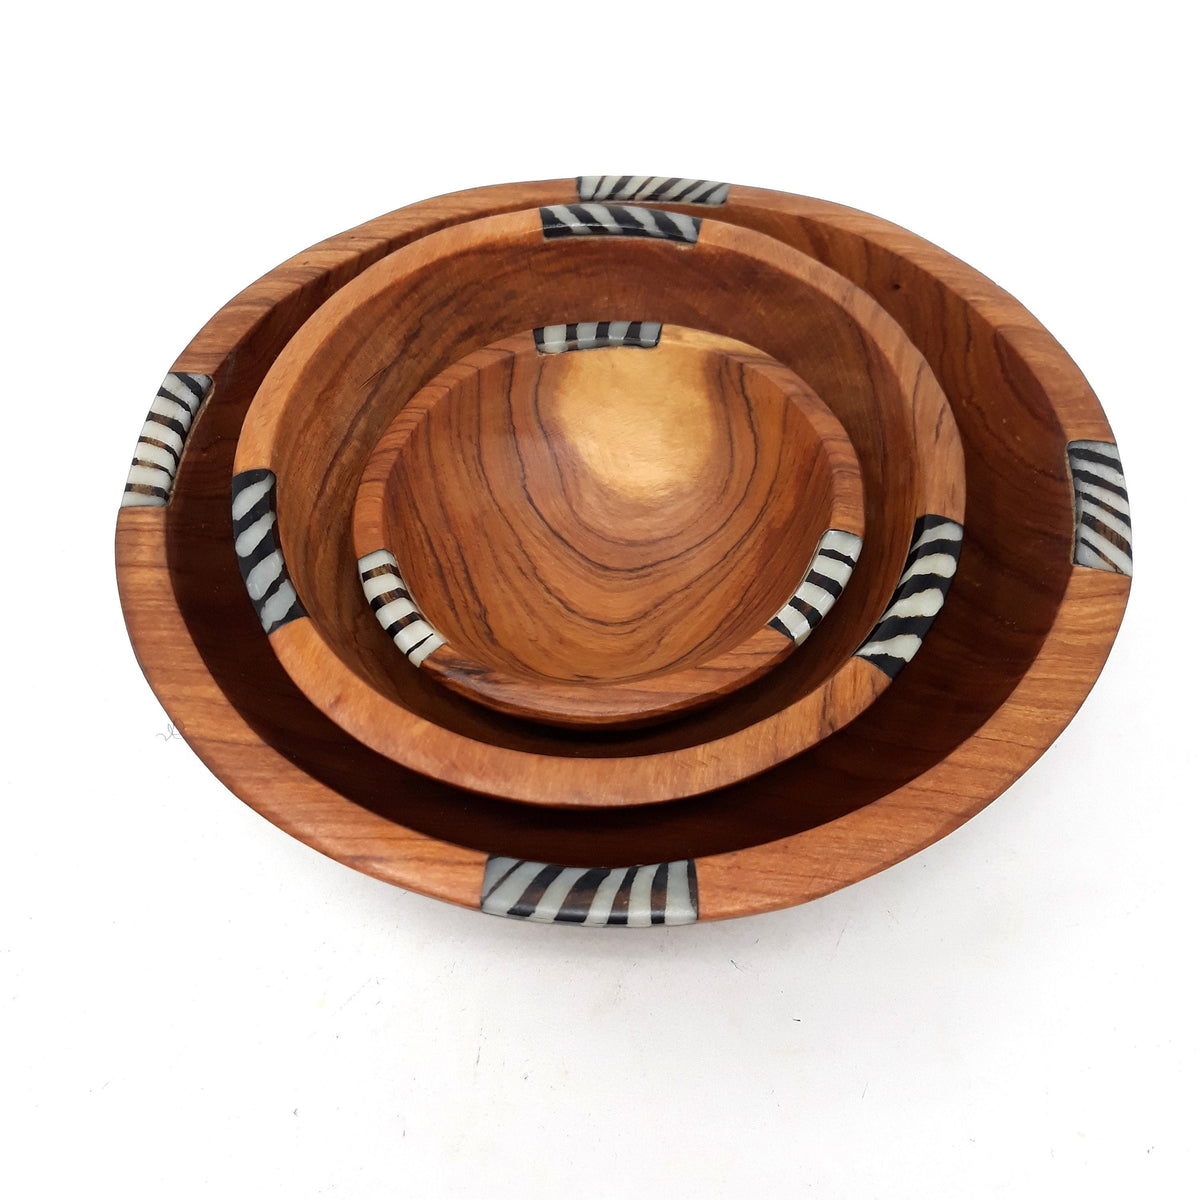 Set of 3 wooden bowls, Handmade wooden bowl, Decorative rustic bowl, Farmhouse wood bowl, wooden snack bowls, set of wood bowls, Olivewood